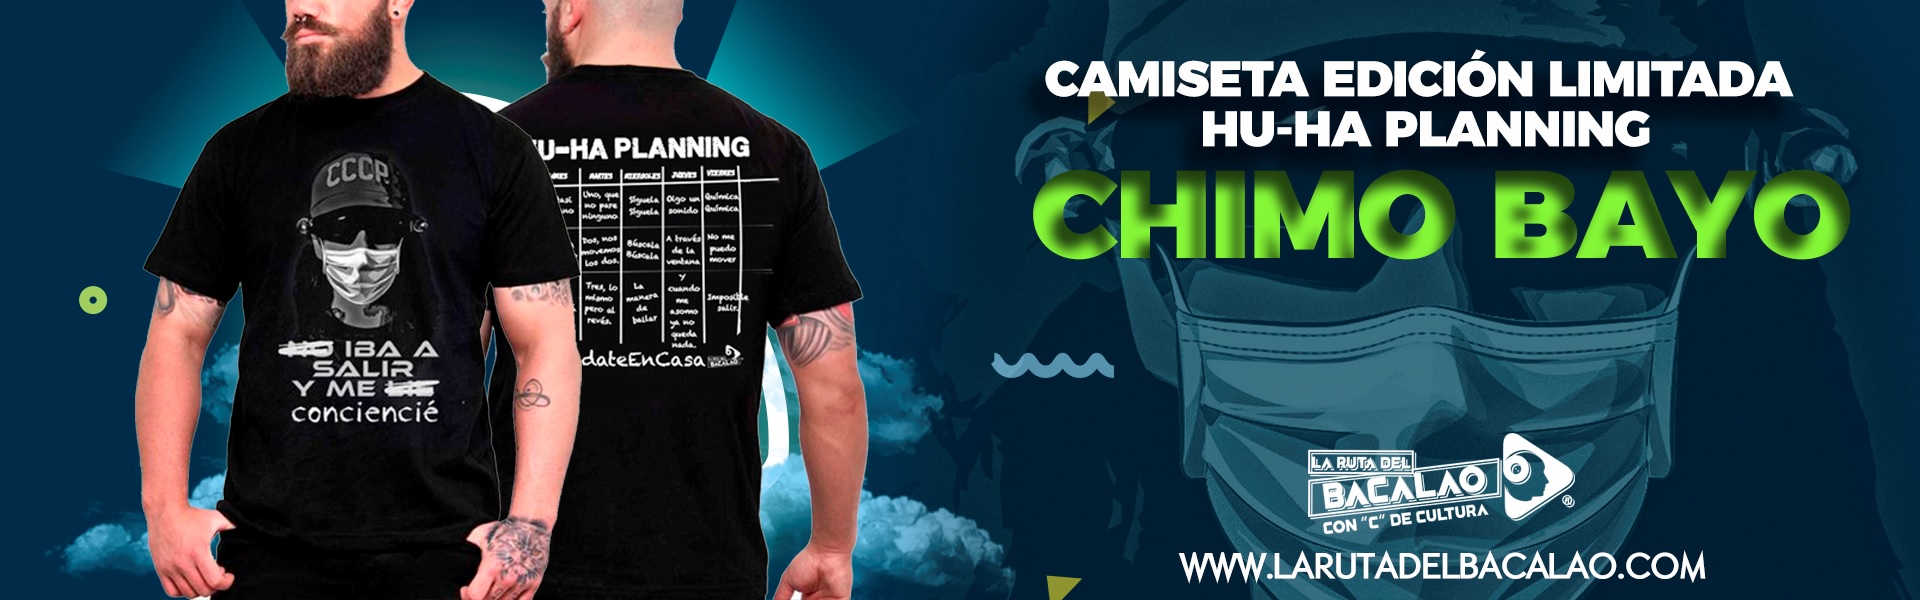 Camiseta Chimo Bayo Edición Limitada HU-HA PLANNING